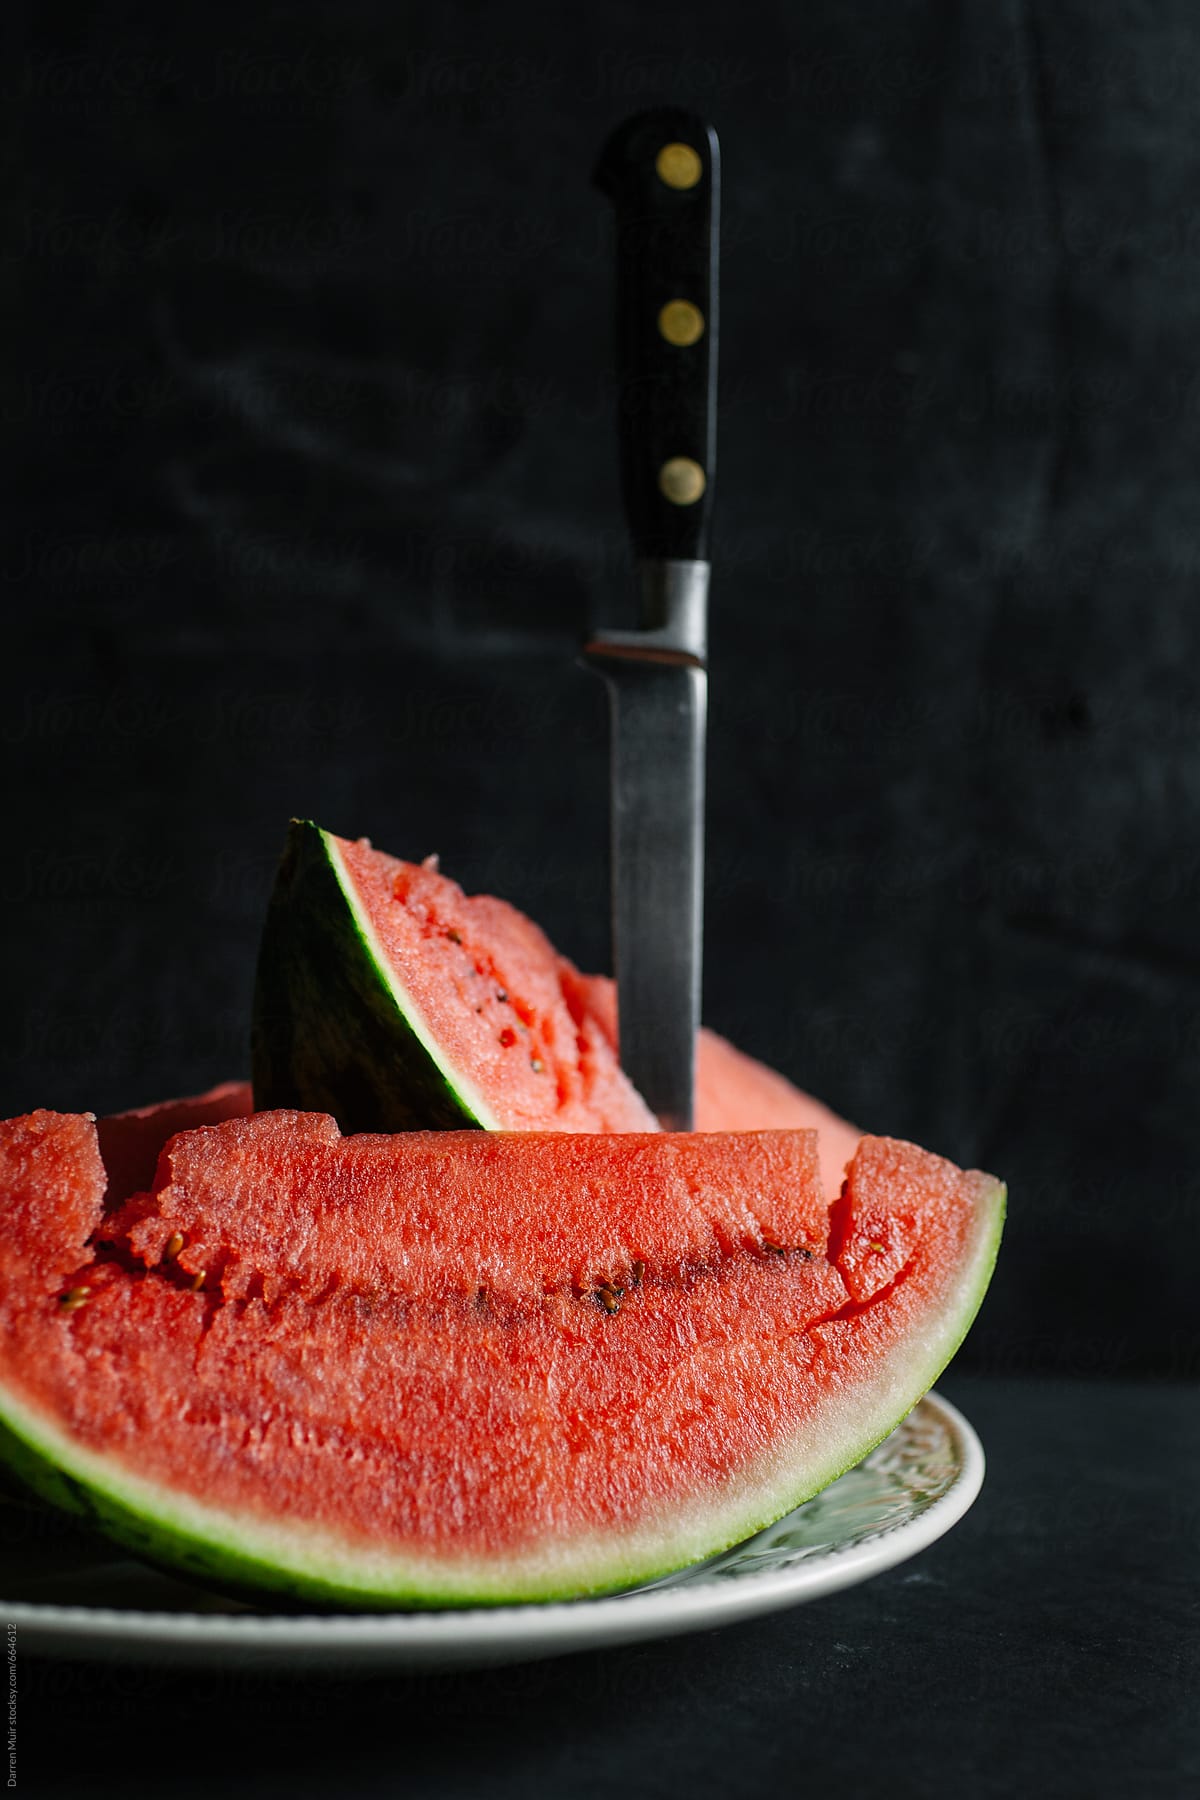 Slices of watermelon in a dark background.